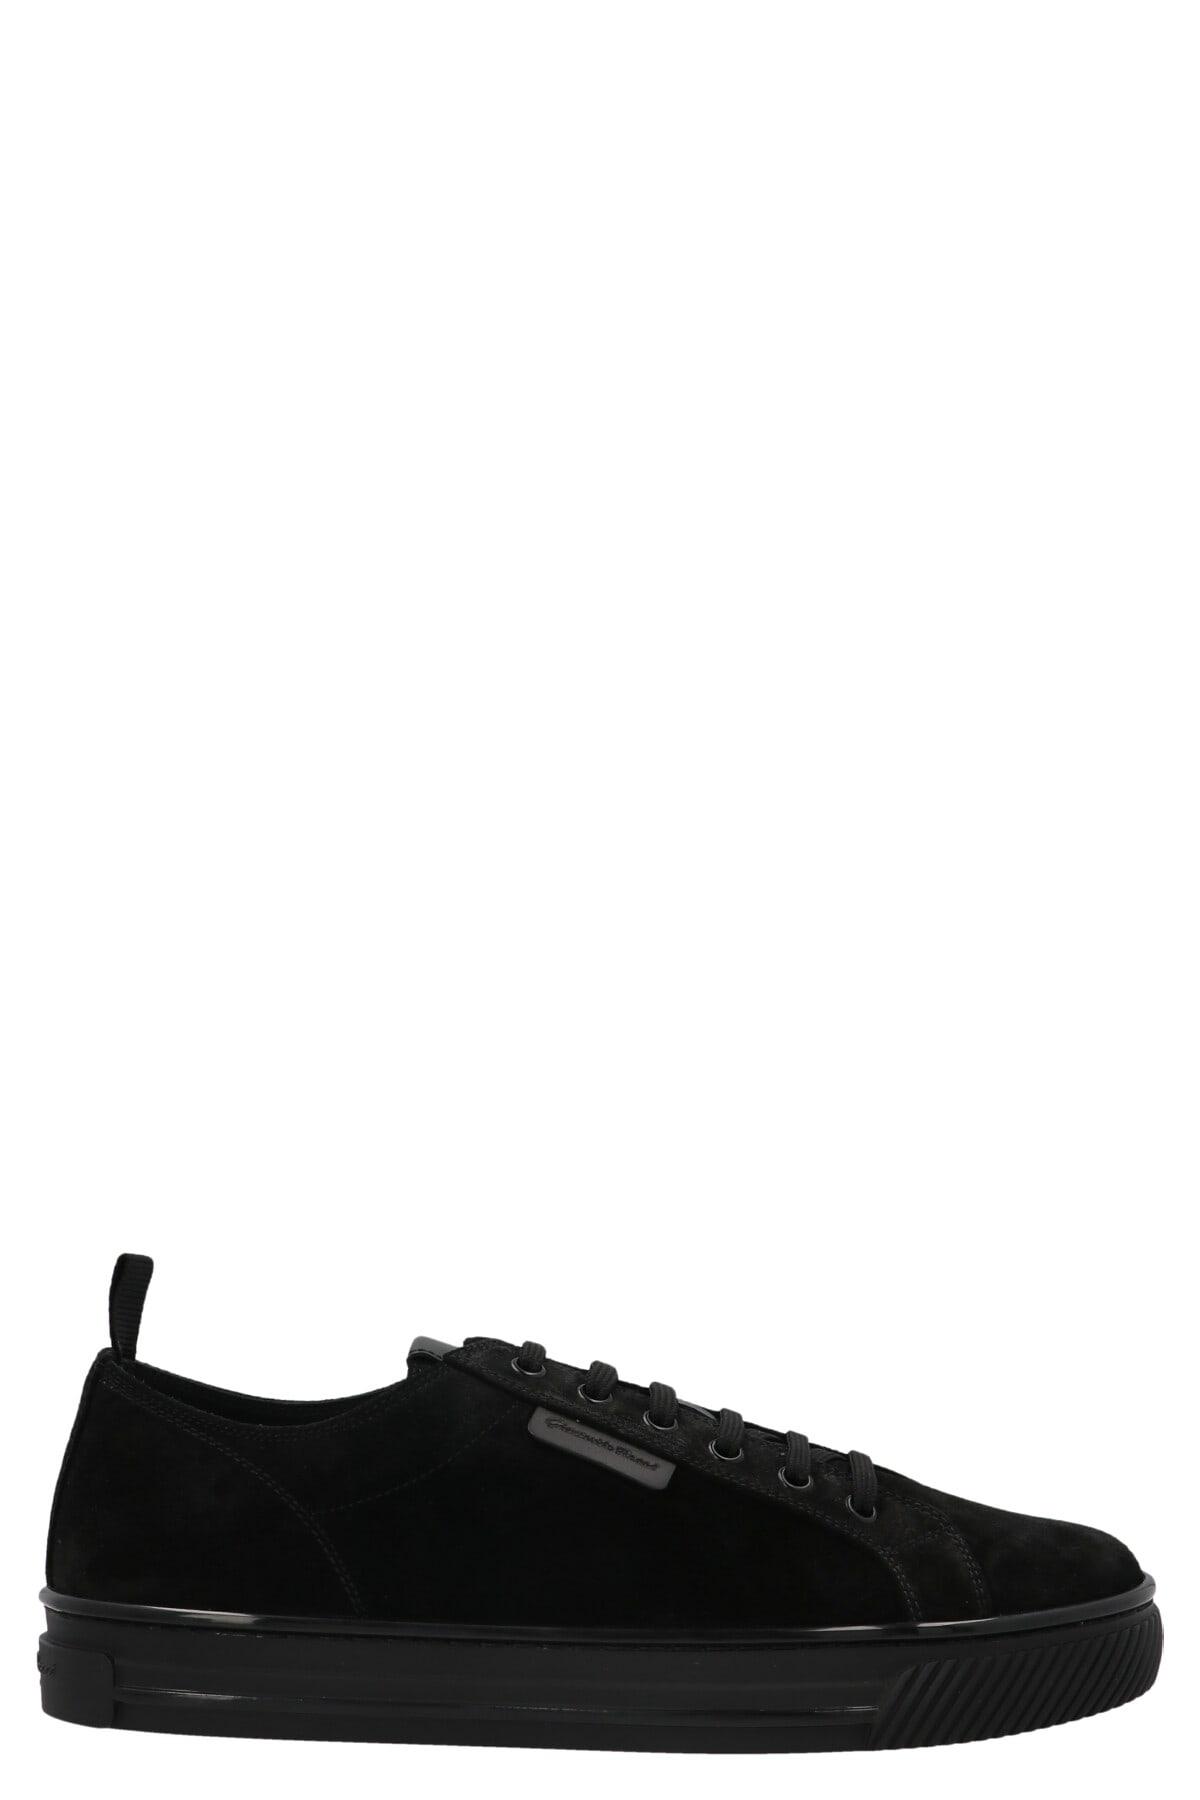 Gianvito Rossi 360 Low Sneakers Black for Men | Lyst